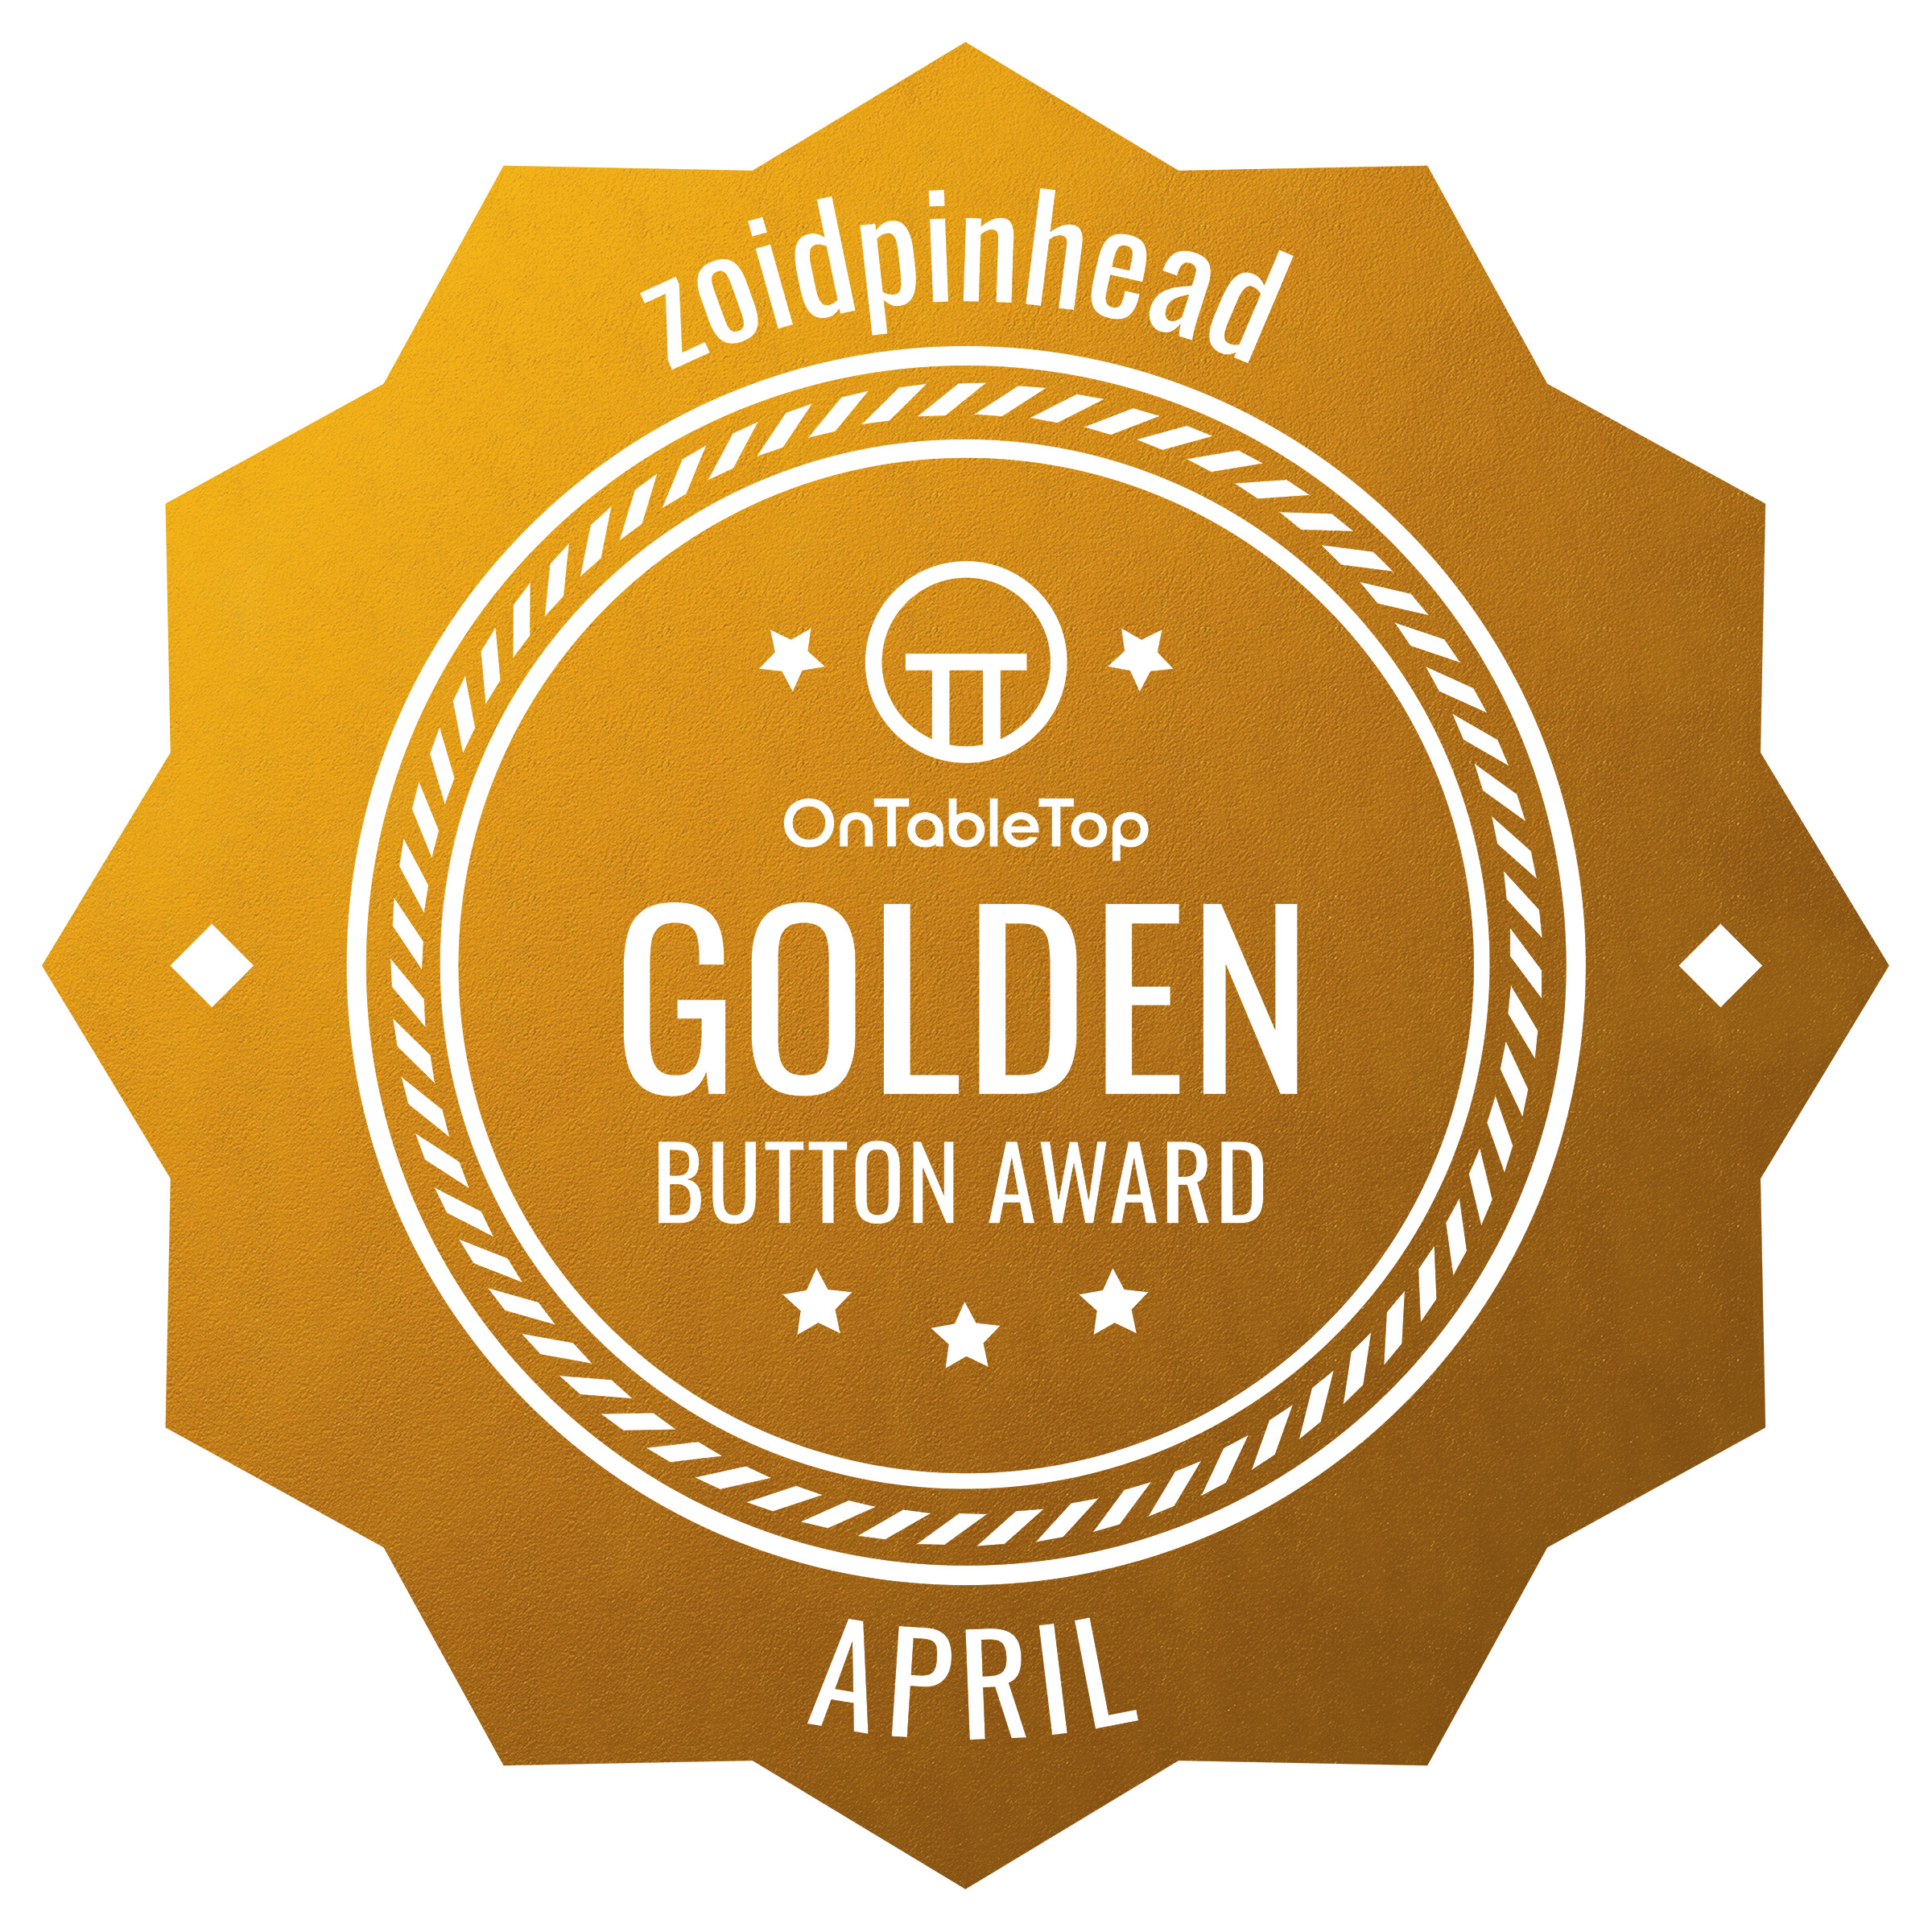 zoidpinhead - Gold Button